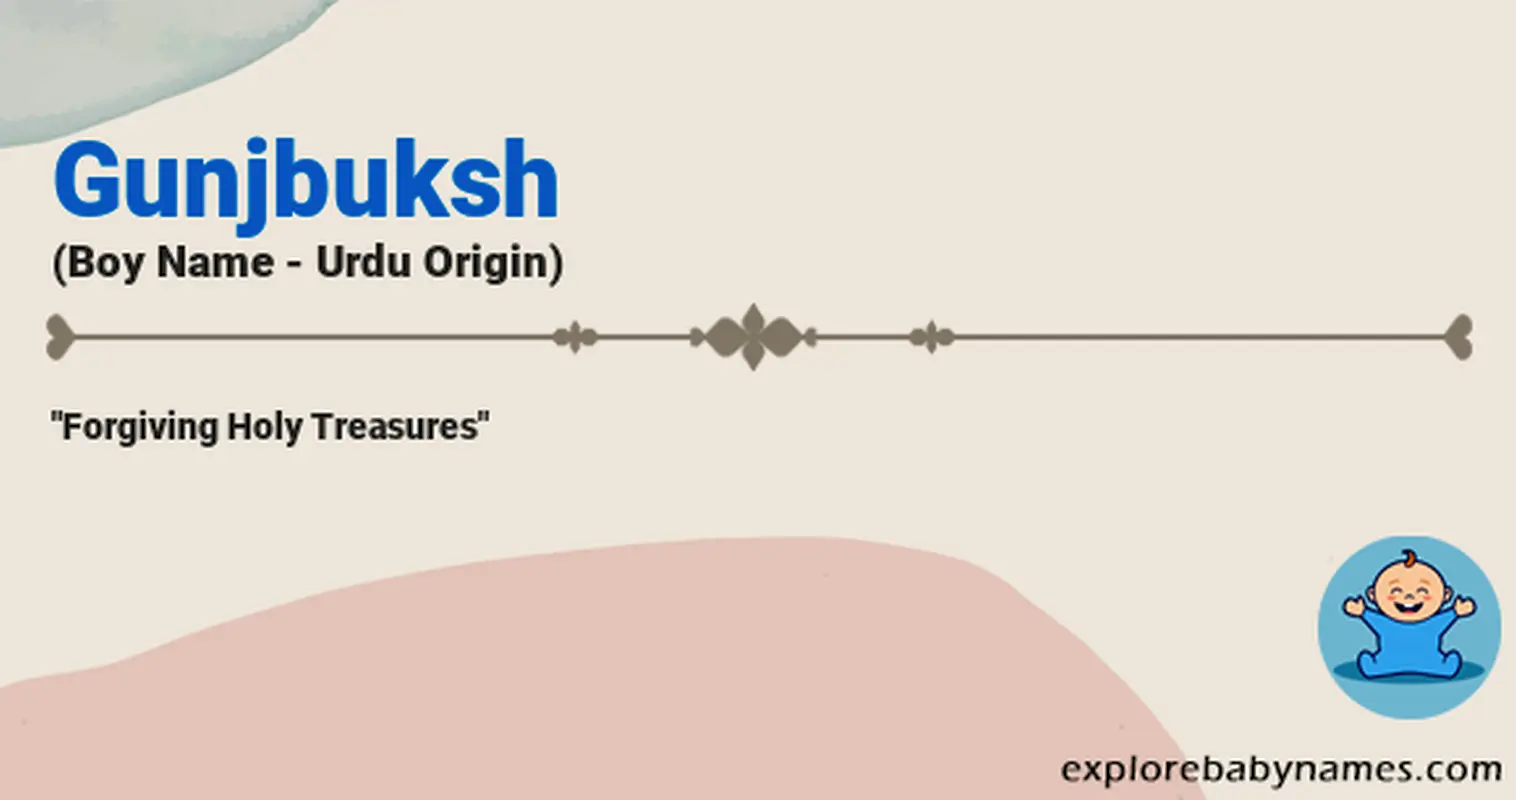 Meaning of Gunjbuksh